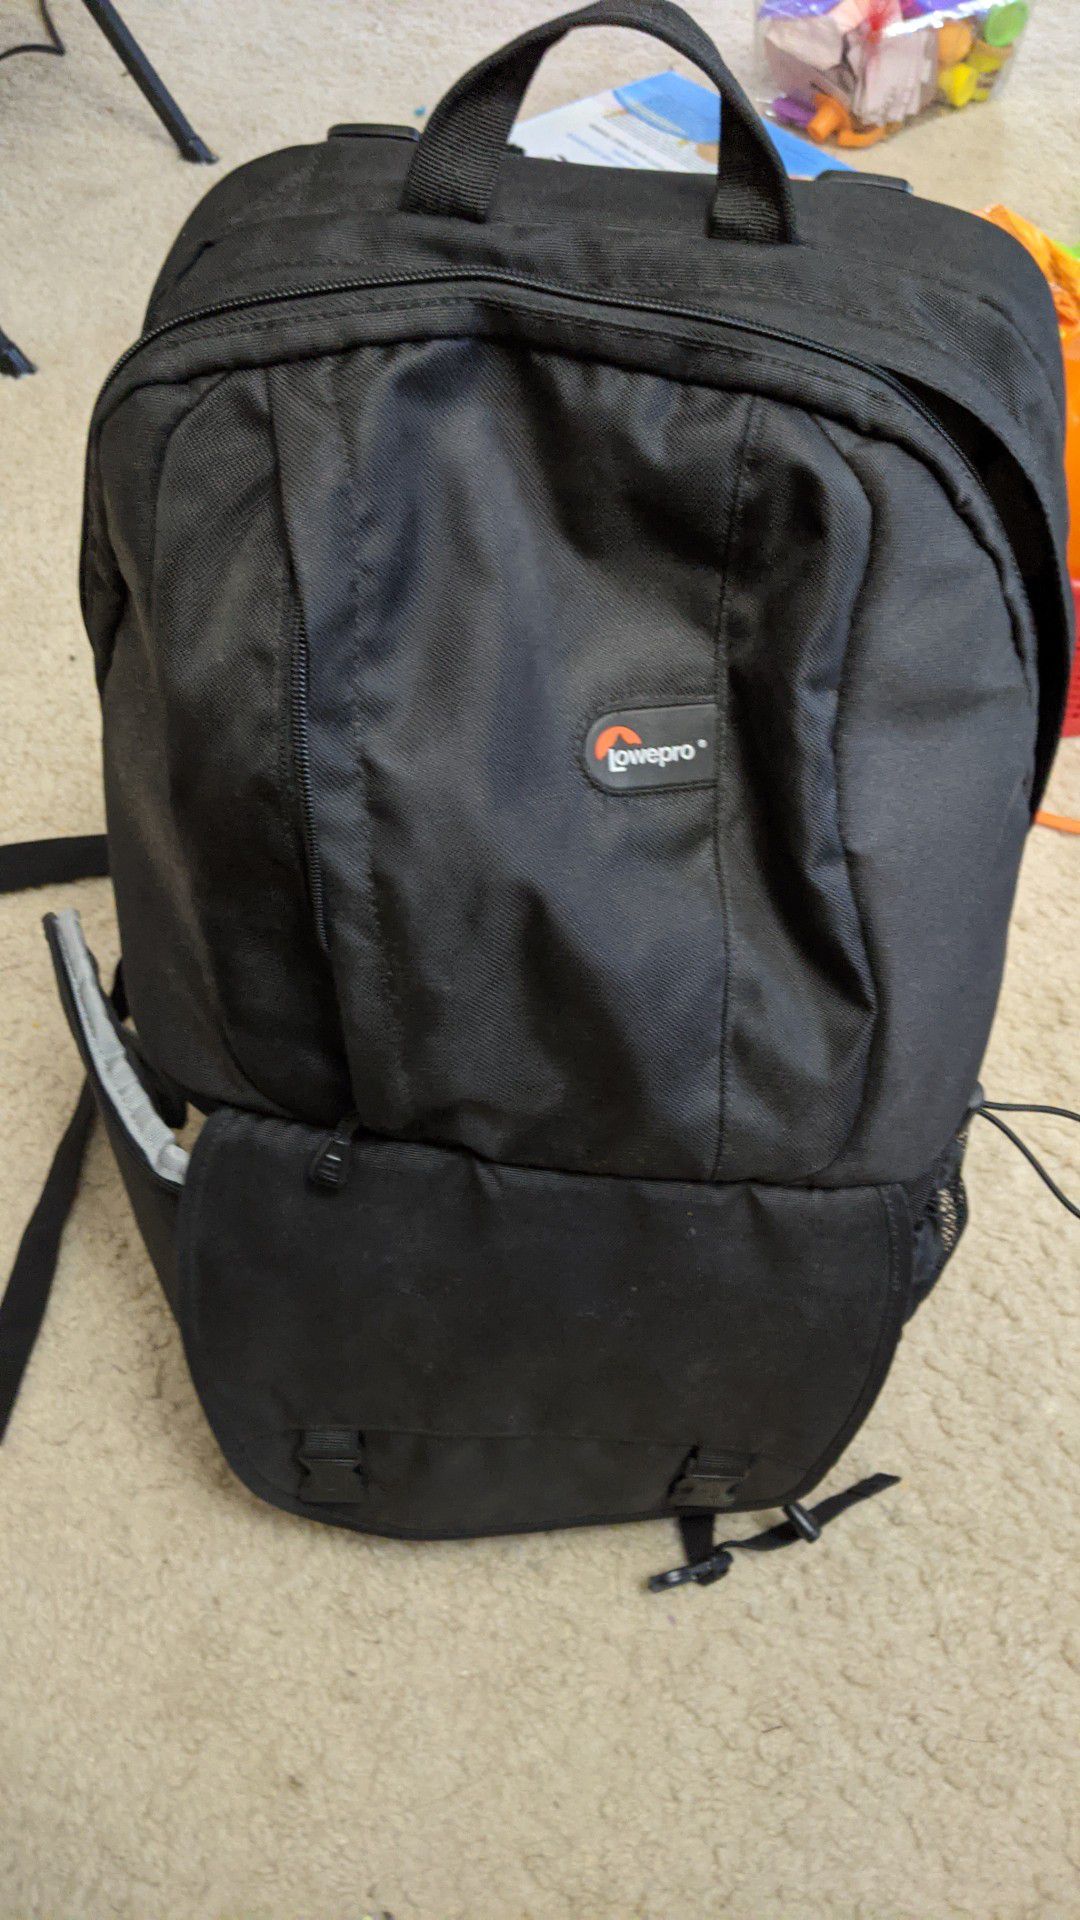 Lowepro DSLR Camera Bag